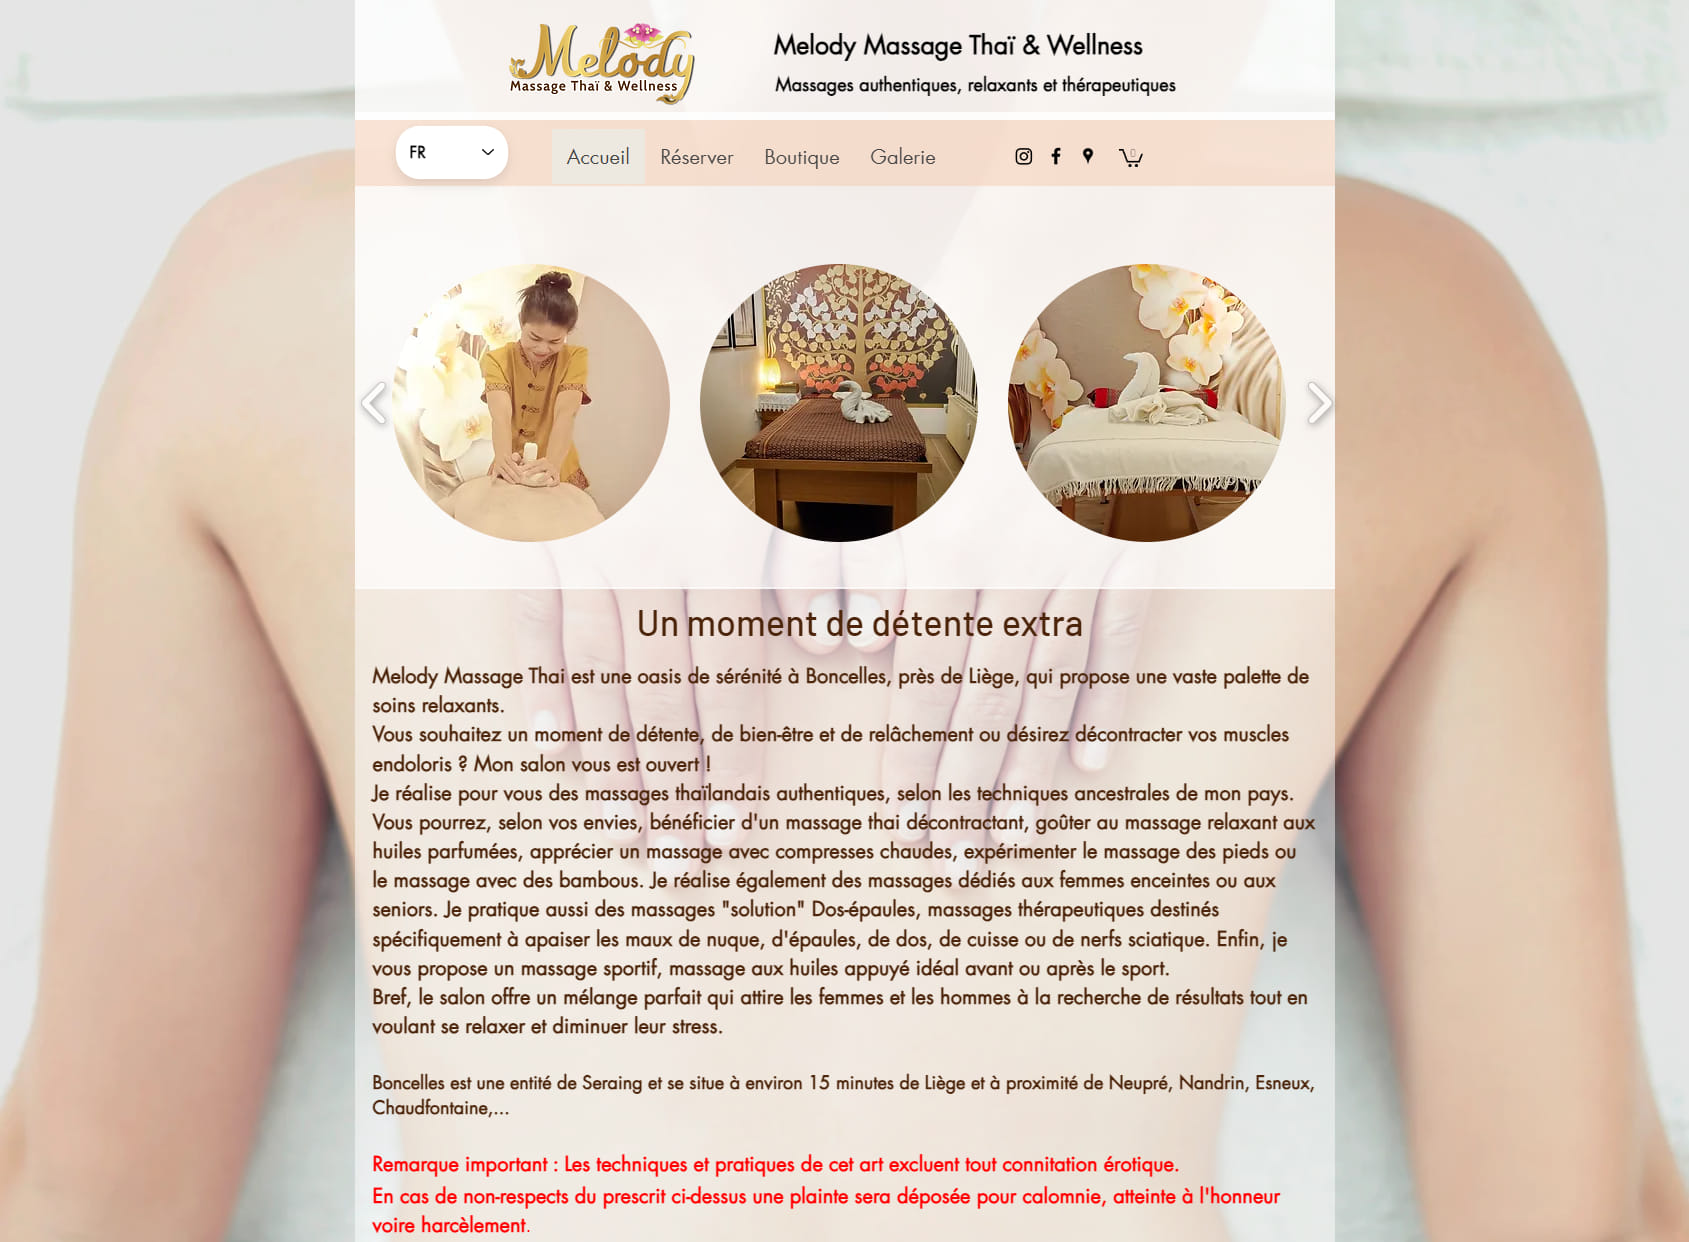 Melody Massage Thaï & Wellness